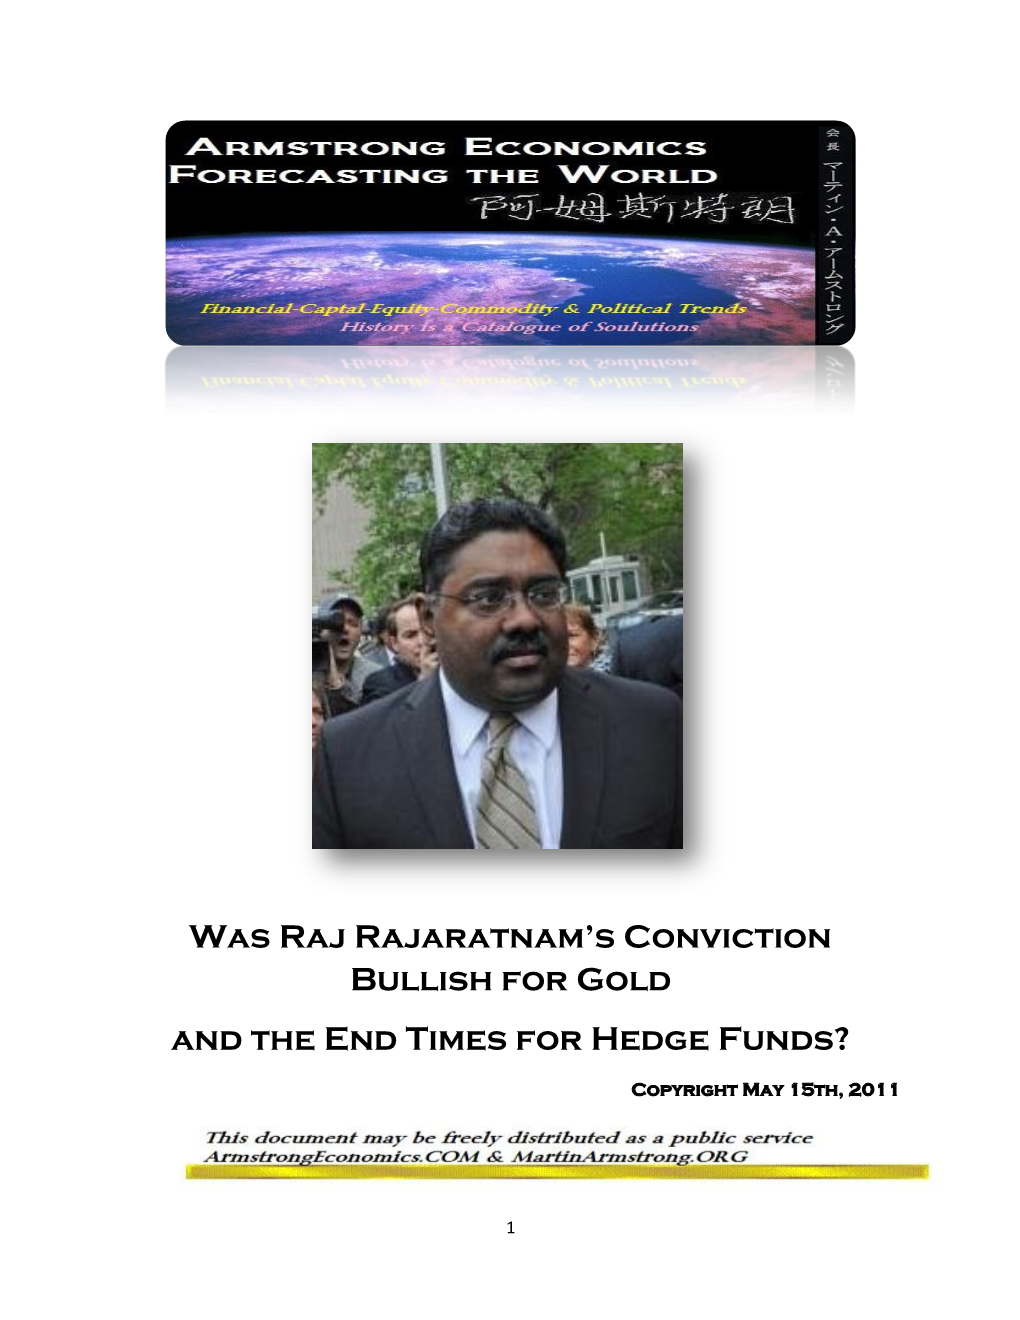 Armstrong Economics: Was Raj Rajaratnam's Conviction Bullish For